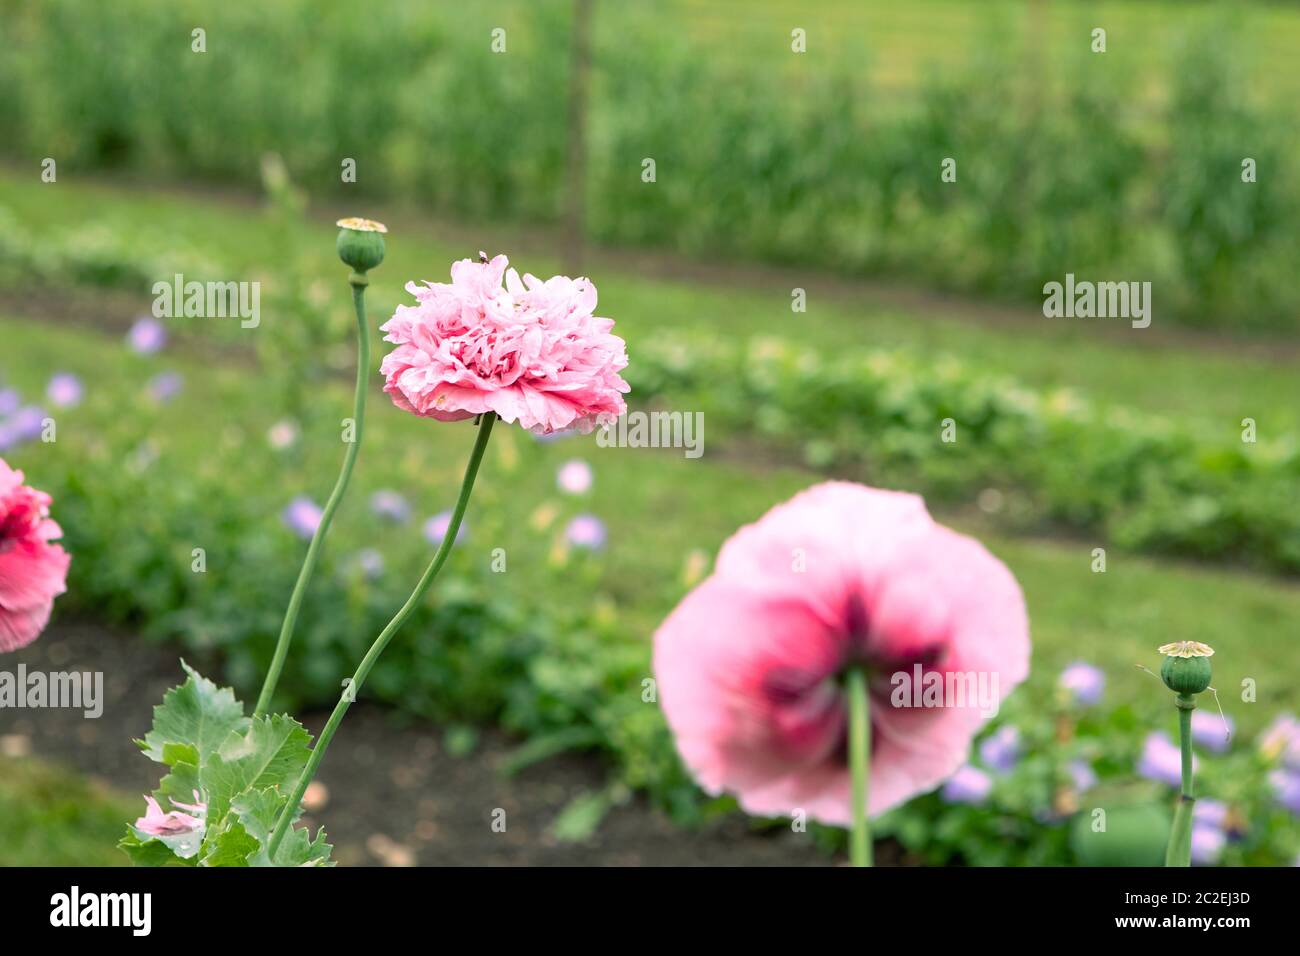 Pink poppy flower in the garden. Stock Photo